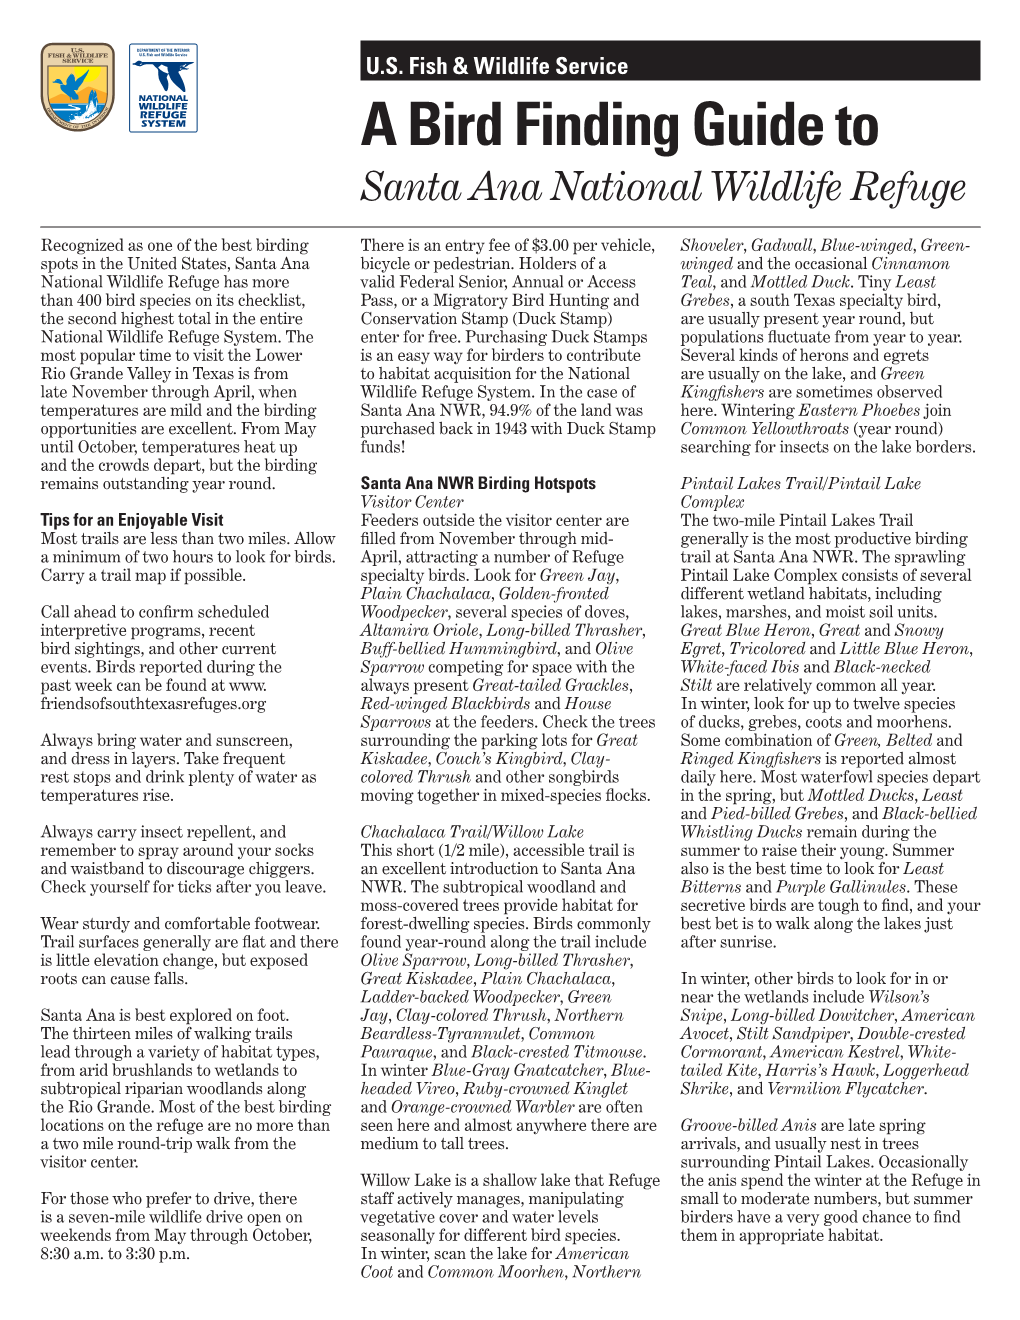 A Bird Finding Guide to Santa Ana National Wildlife Refuge